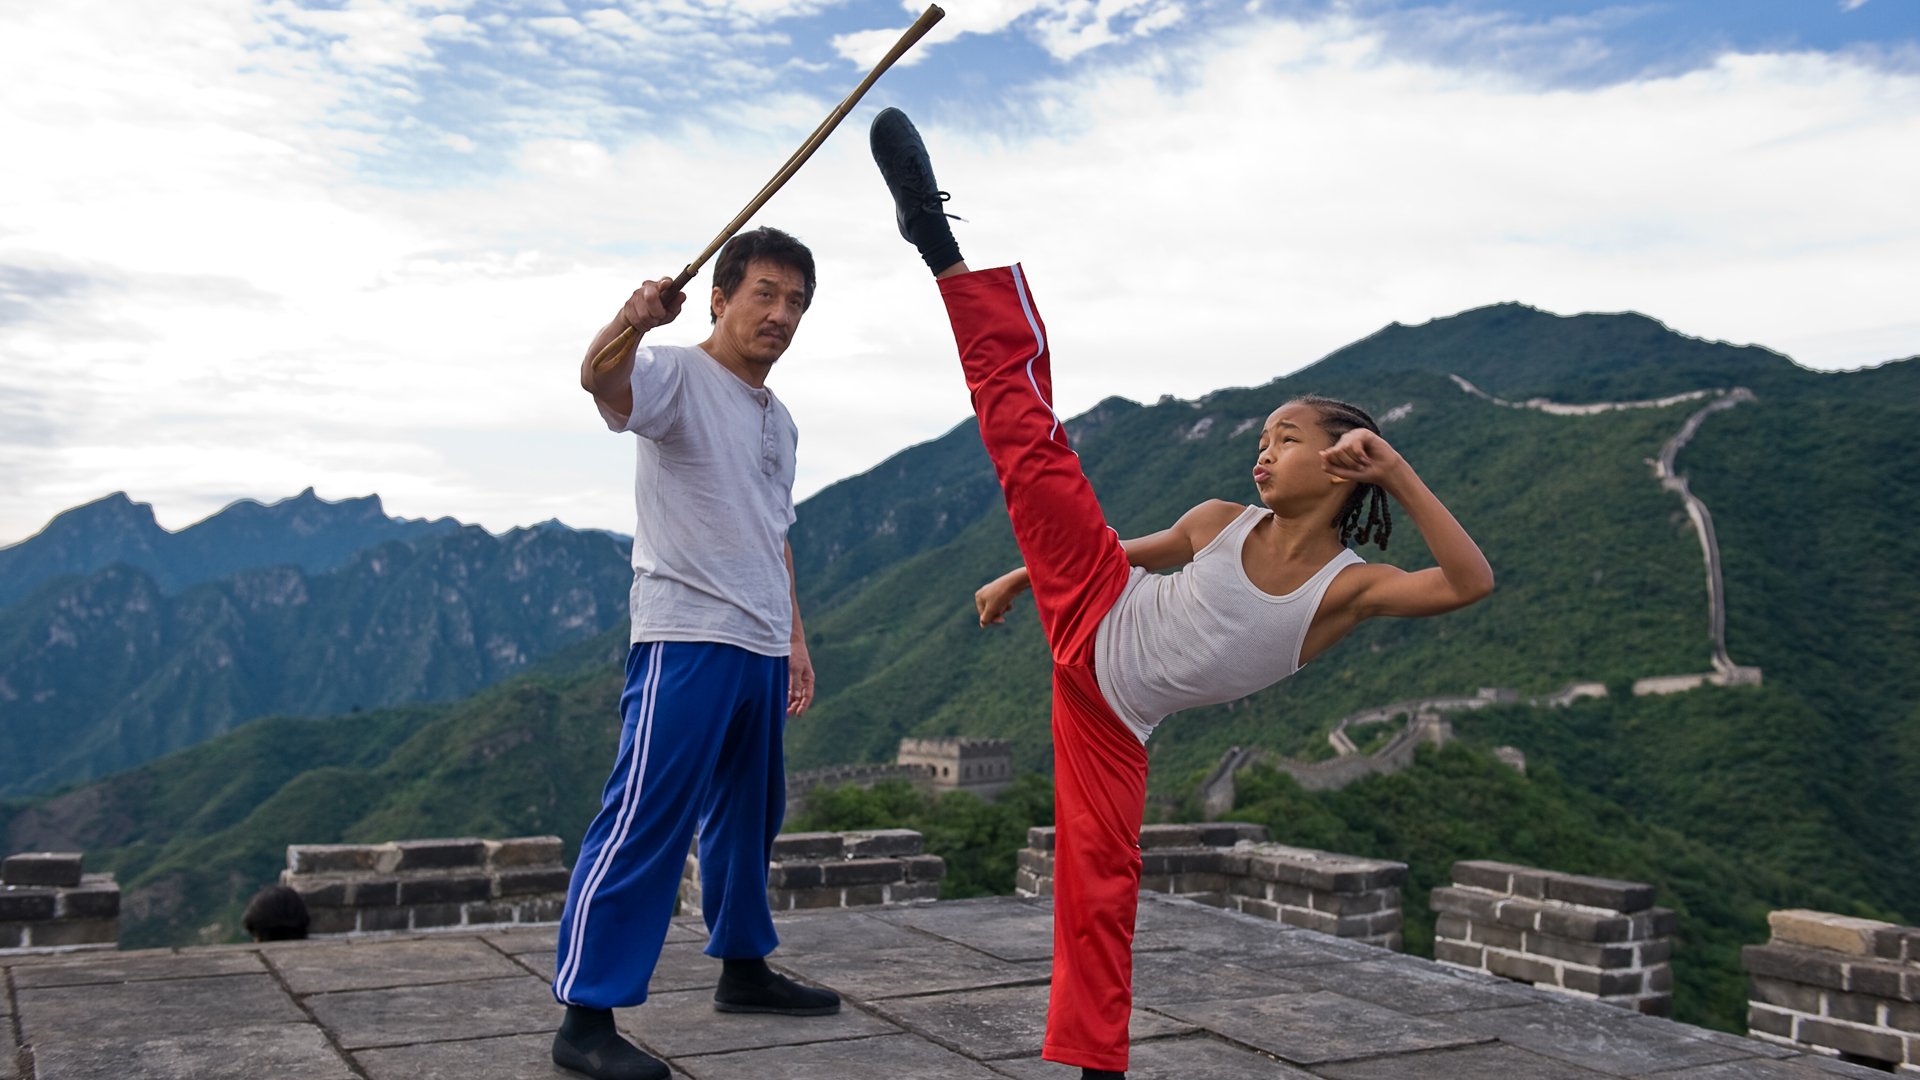 The karate kid 2010 full movie english free online